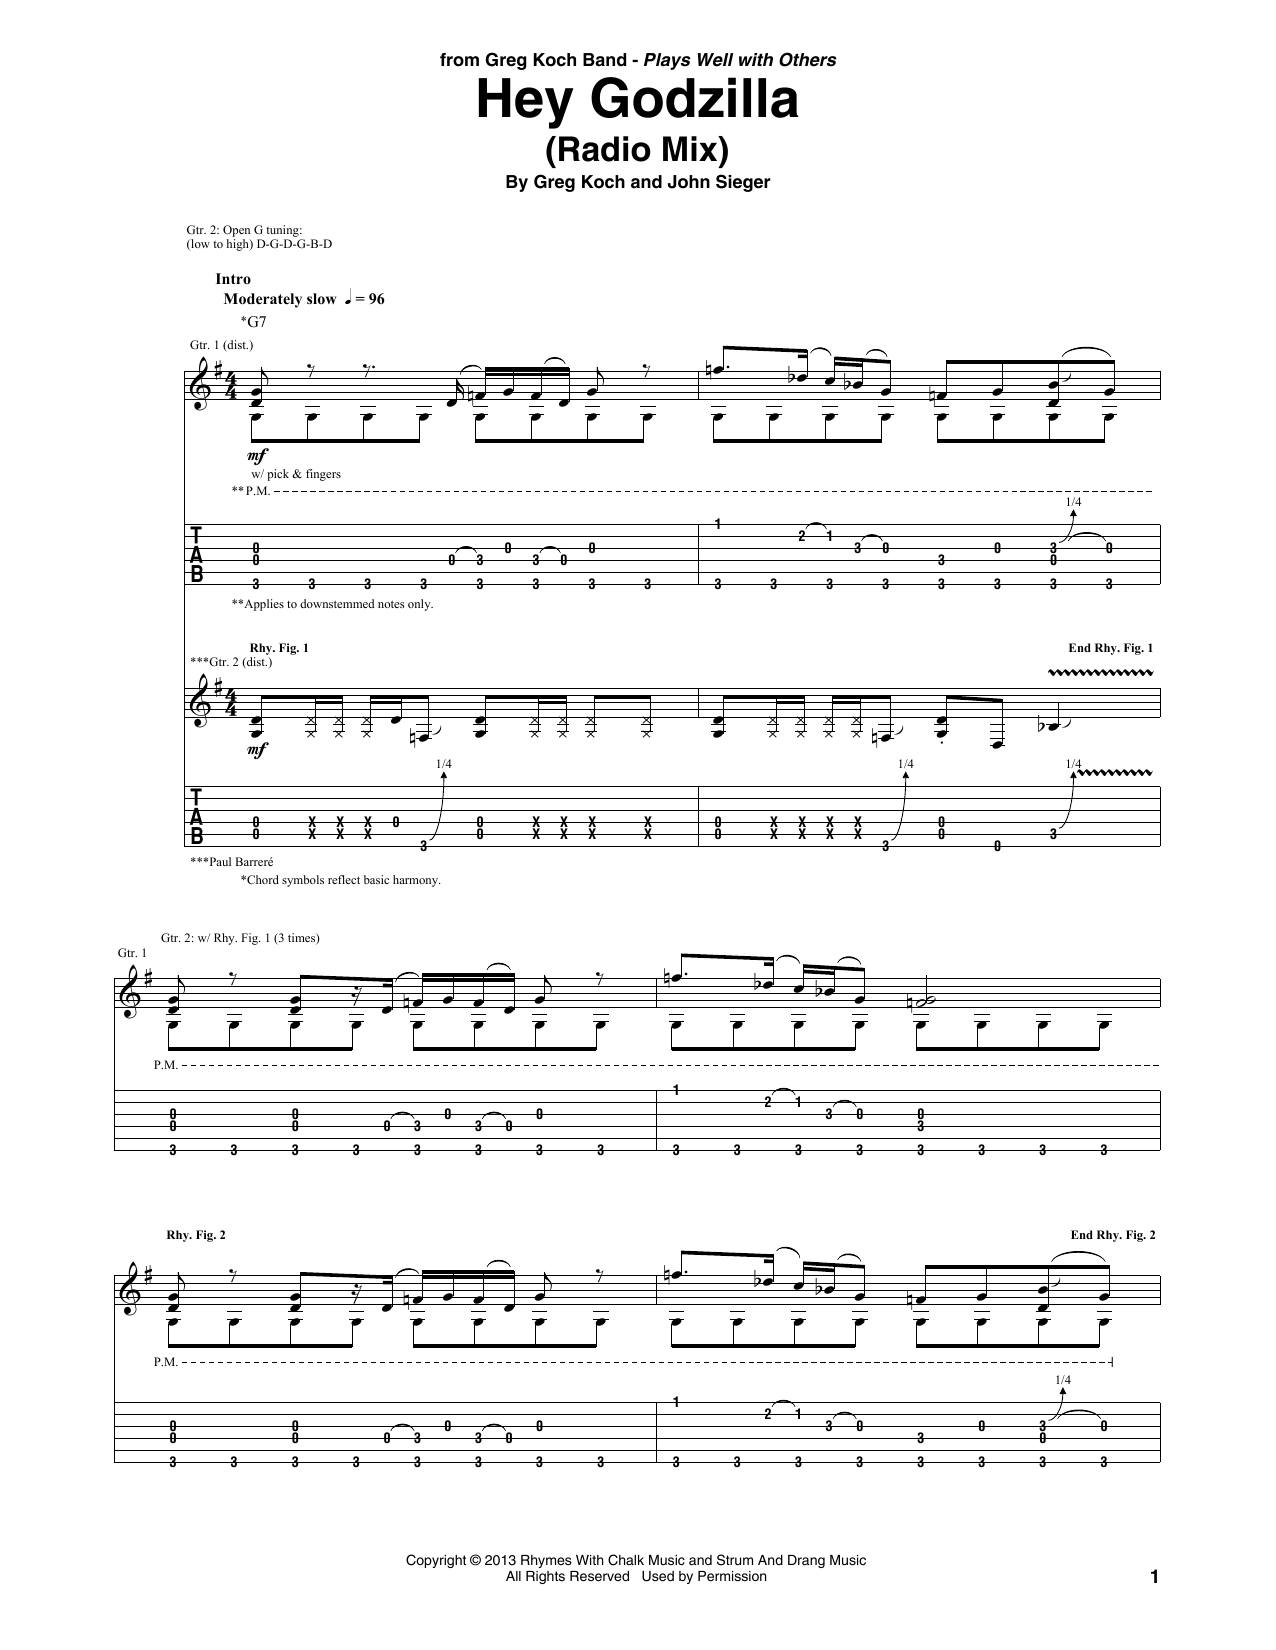 Greg Koch Hey Godzilla Sheet Music Notes & Chords for Guitar Tab - Download or Print PDF